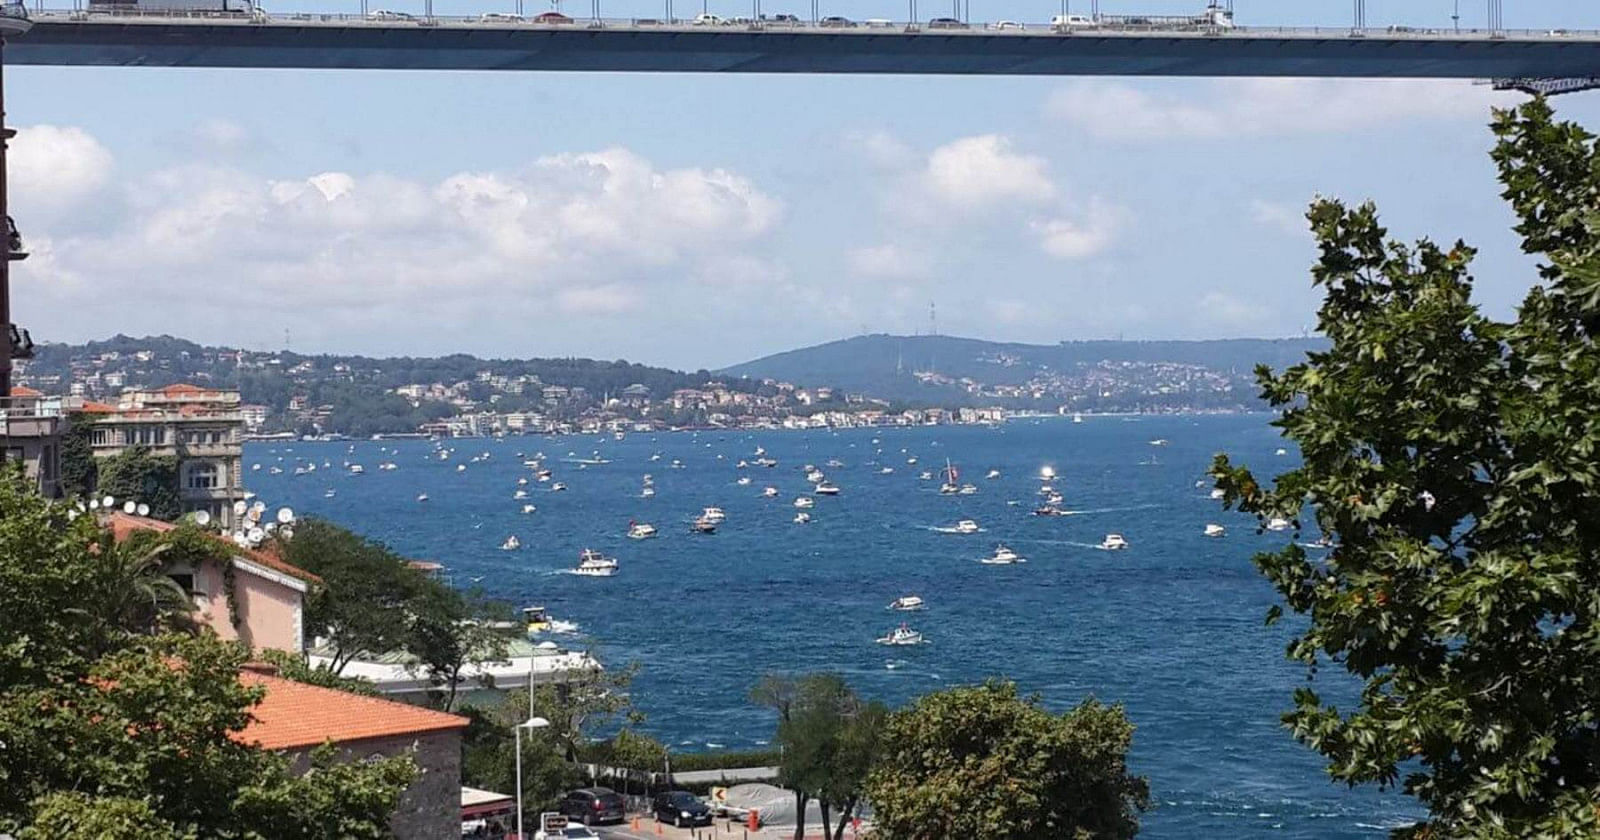 Alquilar un barco en Estambul